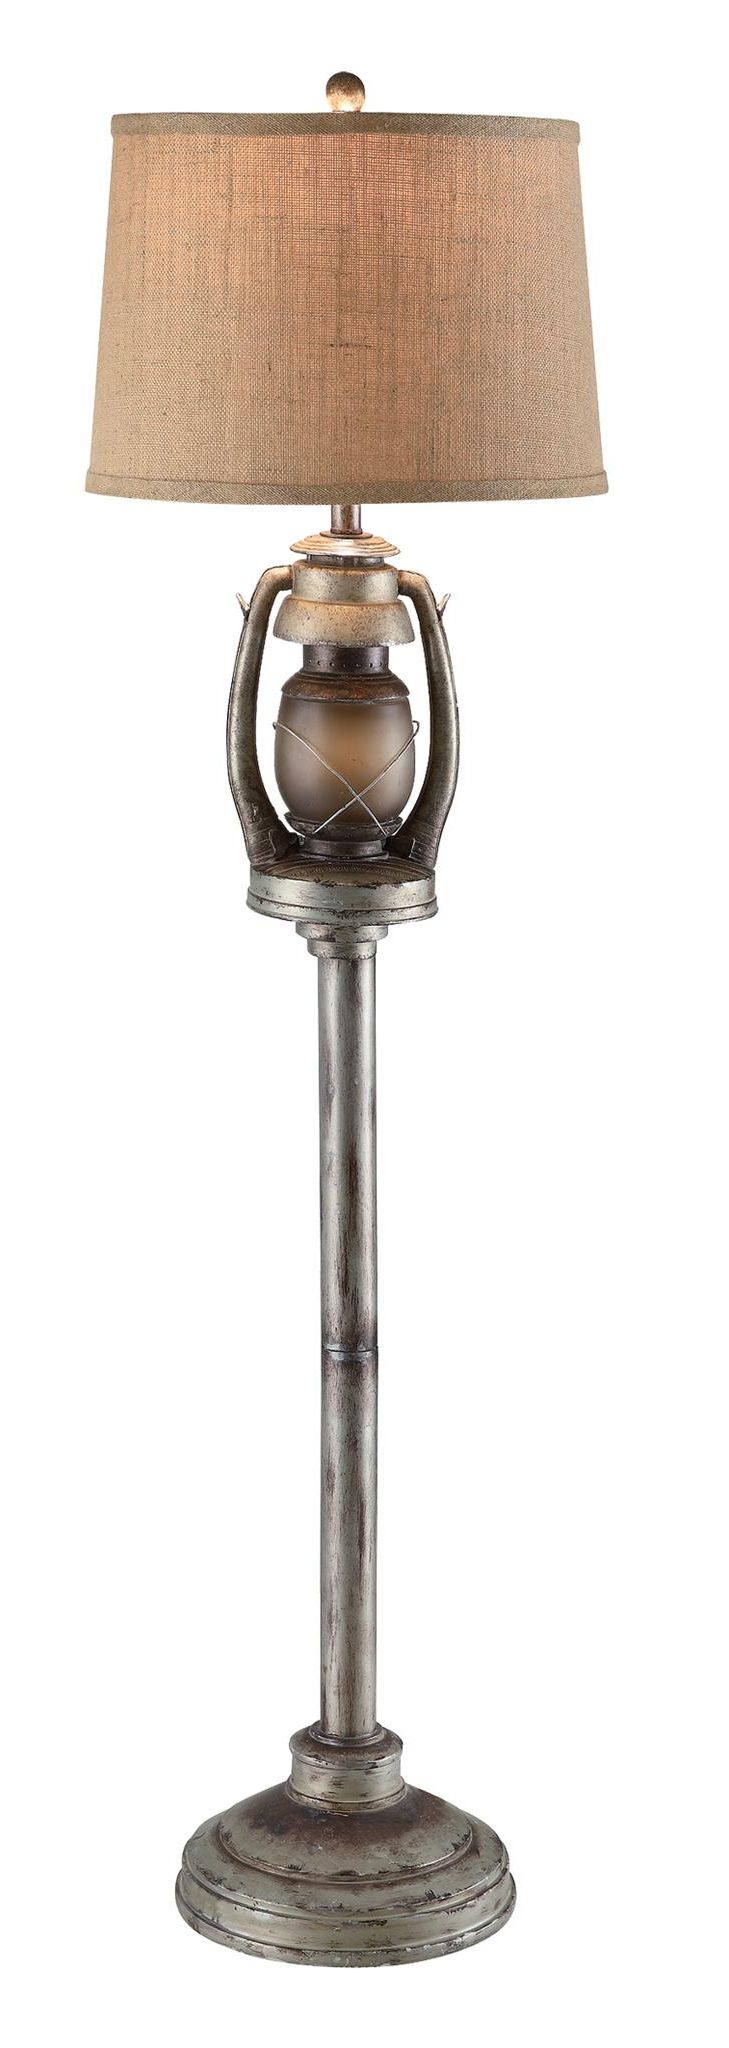 Oil Lantern 62 Inch Floor Lamp, Antique Lantern – Walmart With Regard To 62 Inch Floor Lamps (Gallery 19 of 20)